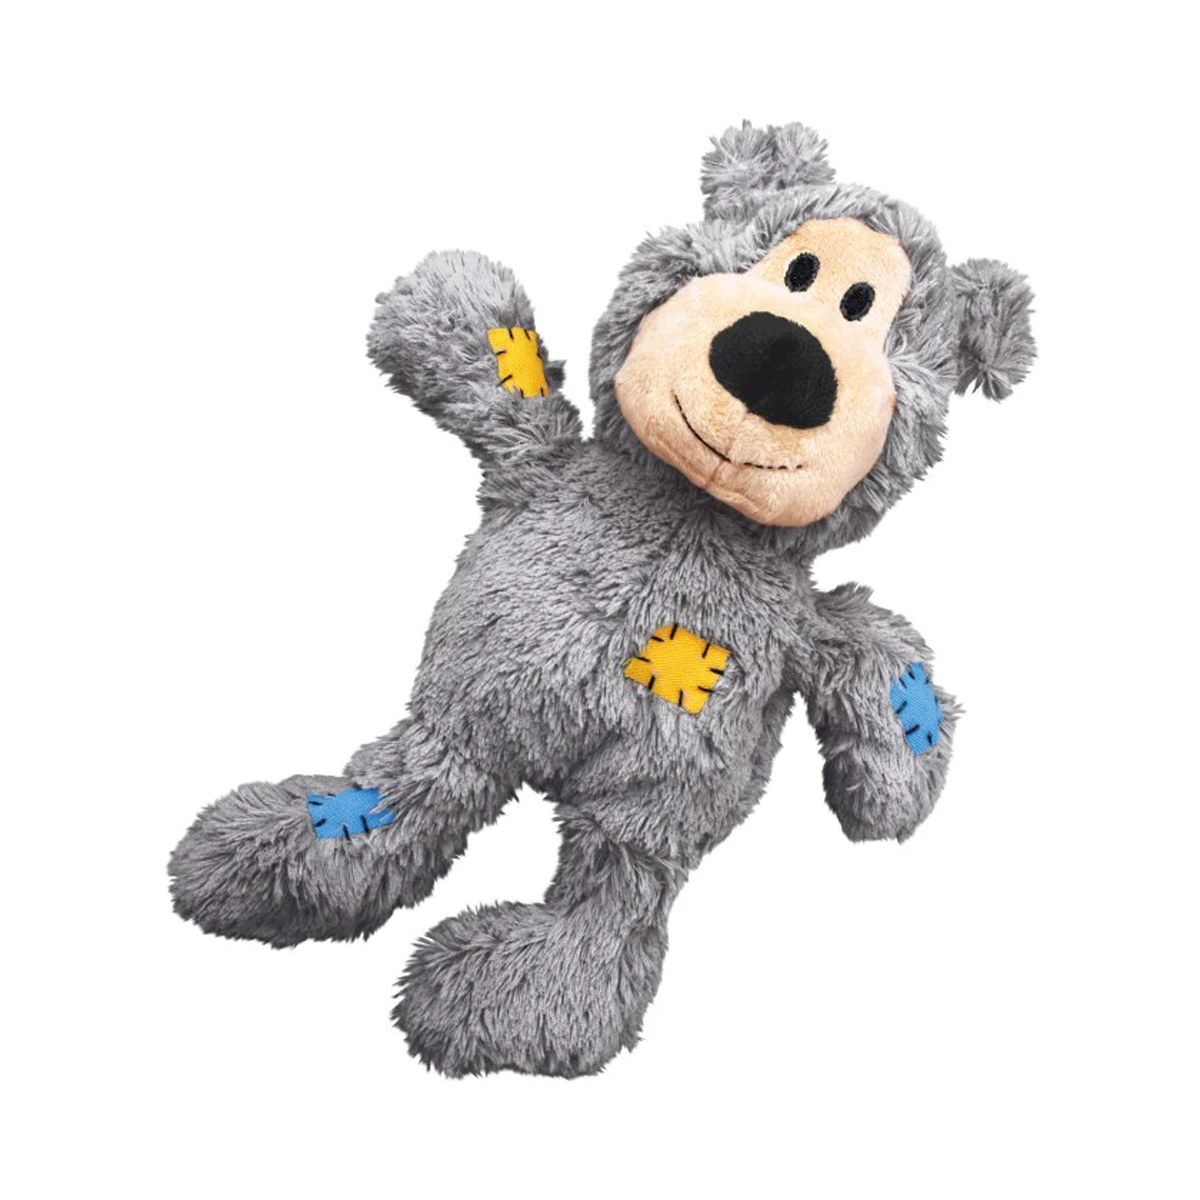 Kong Wild Knots Bear Plush Dog Toy